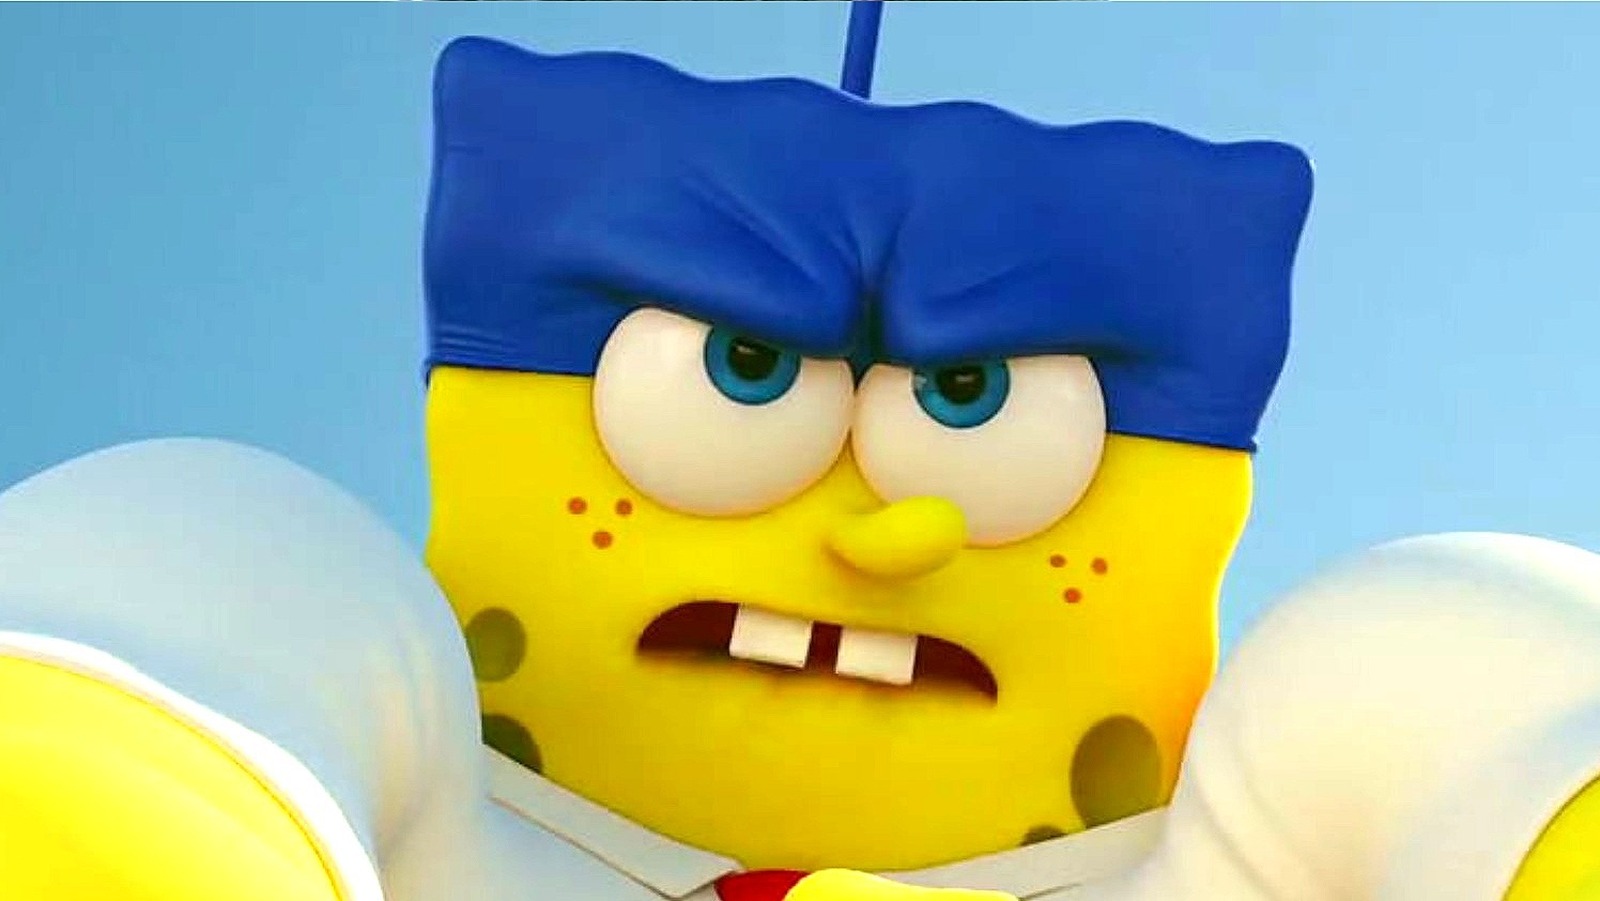 spongebob the movie sponge out of water